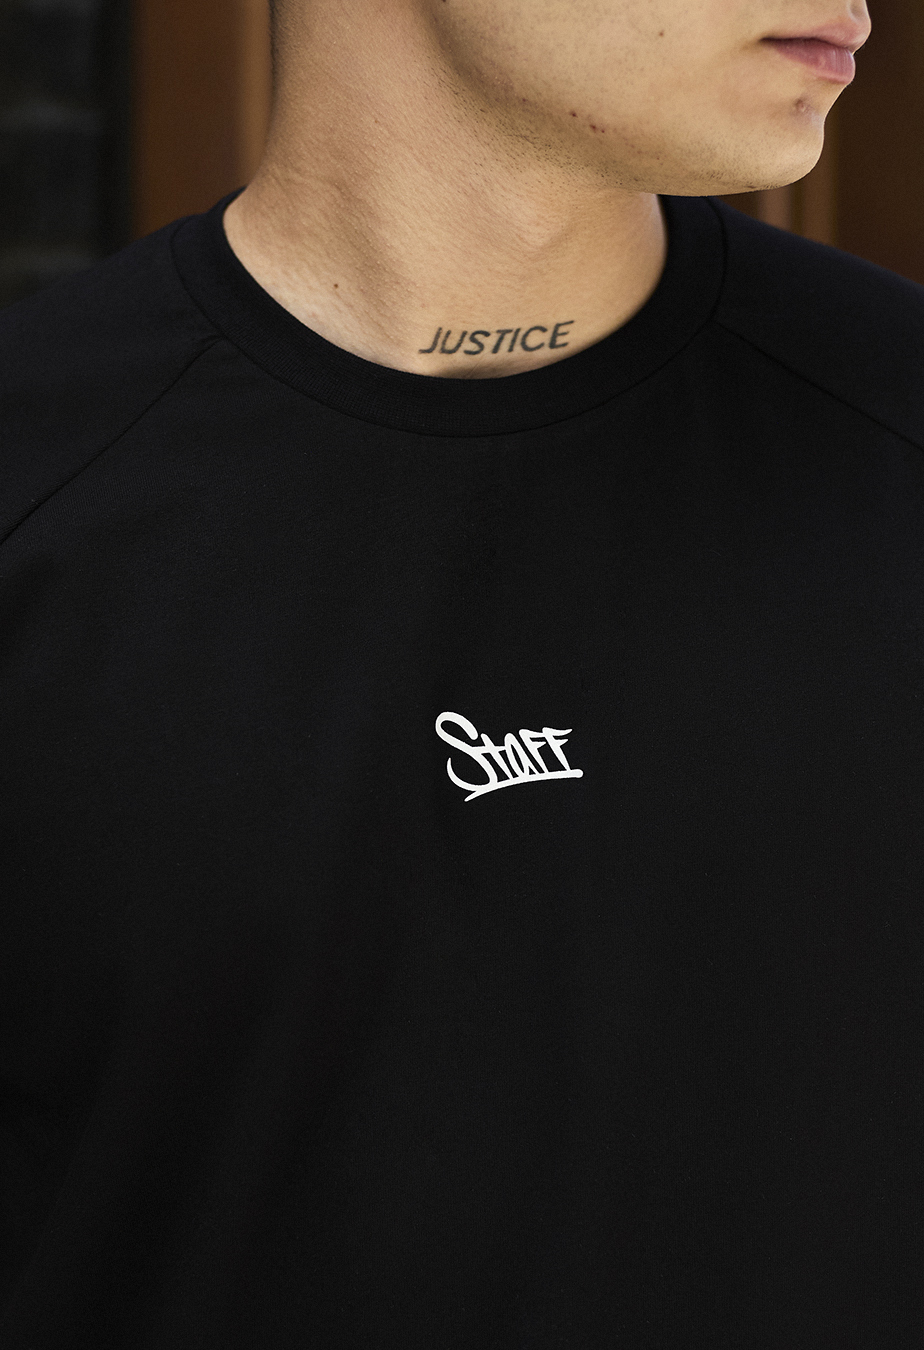 Koszulka Staff black logo